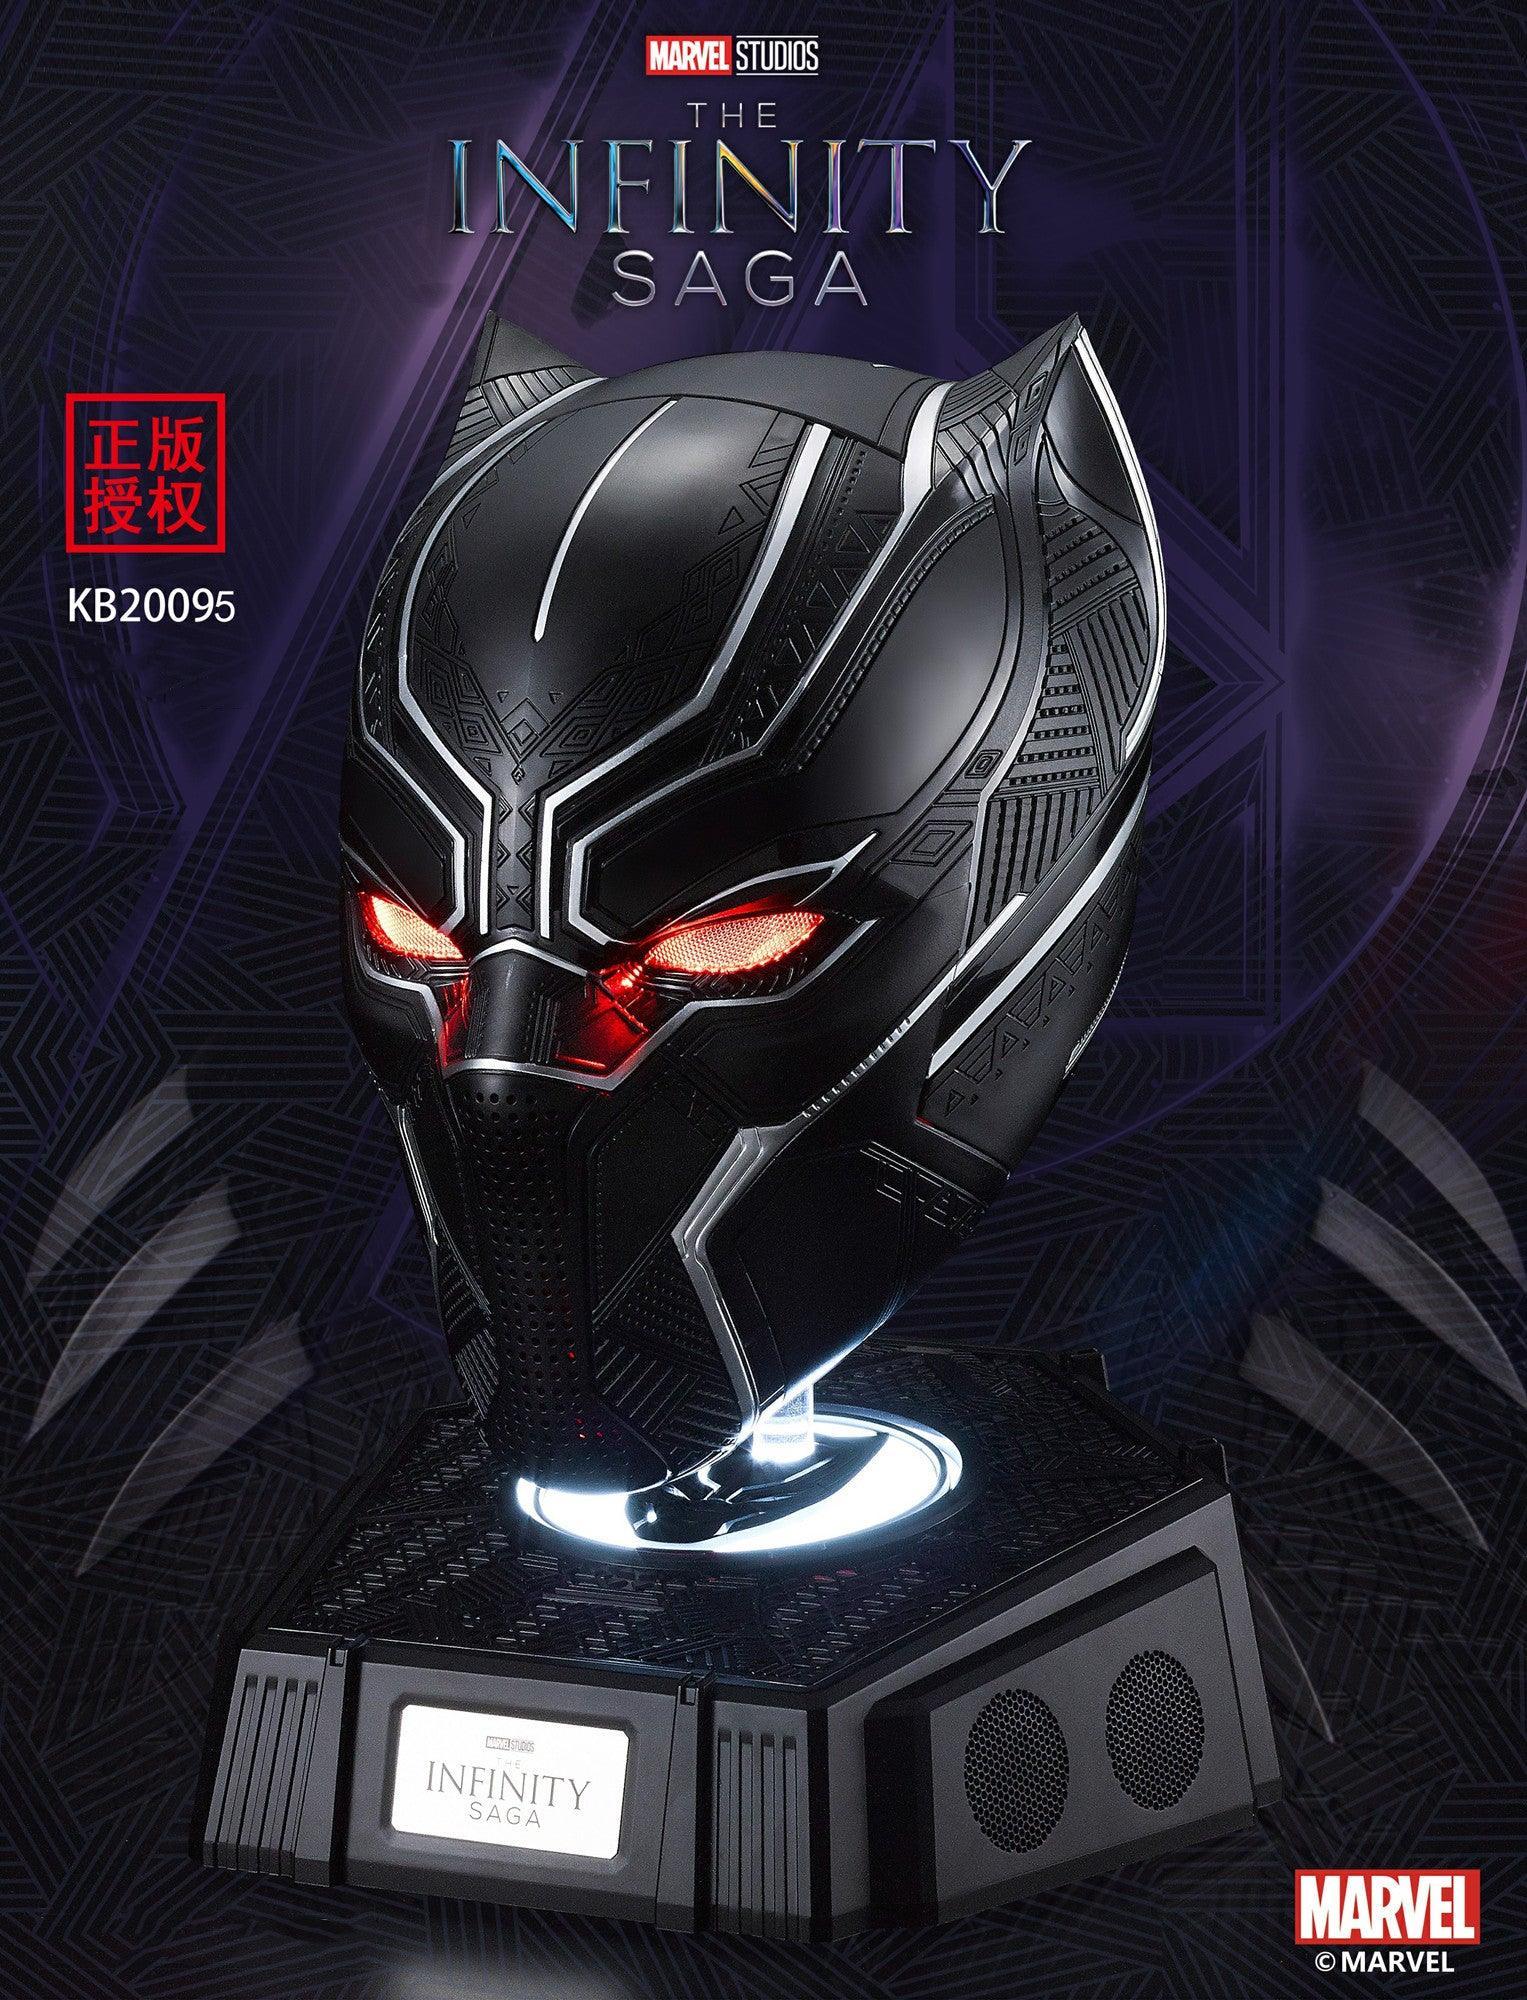 Killerbody - 1:1 Black Panther Head Mask Helmet Base Speaker